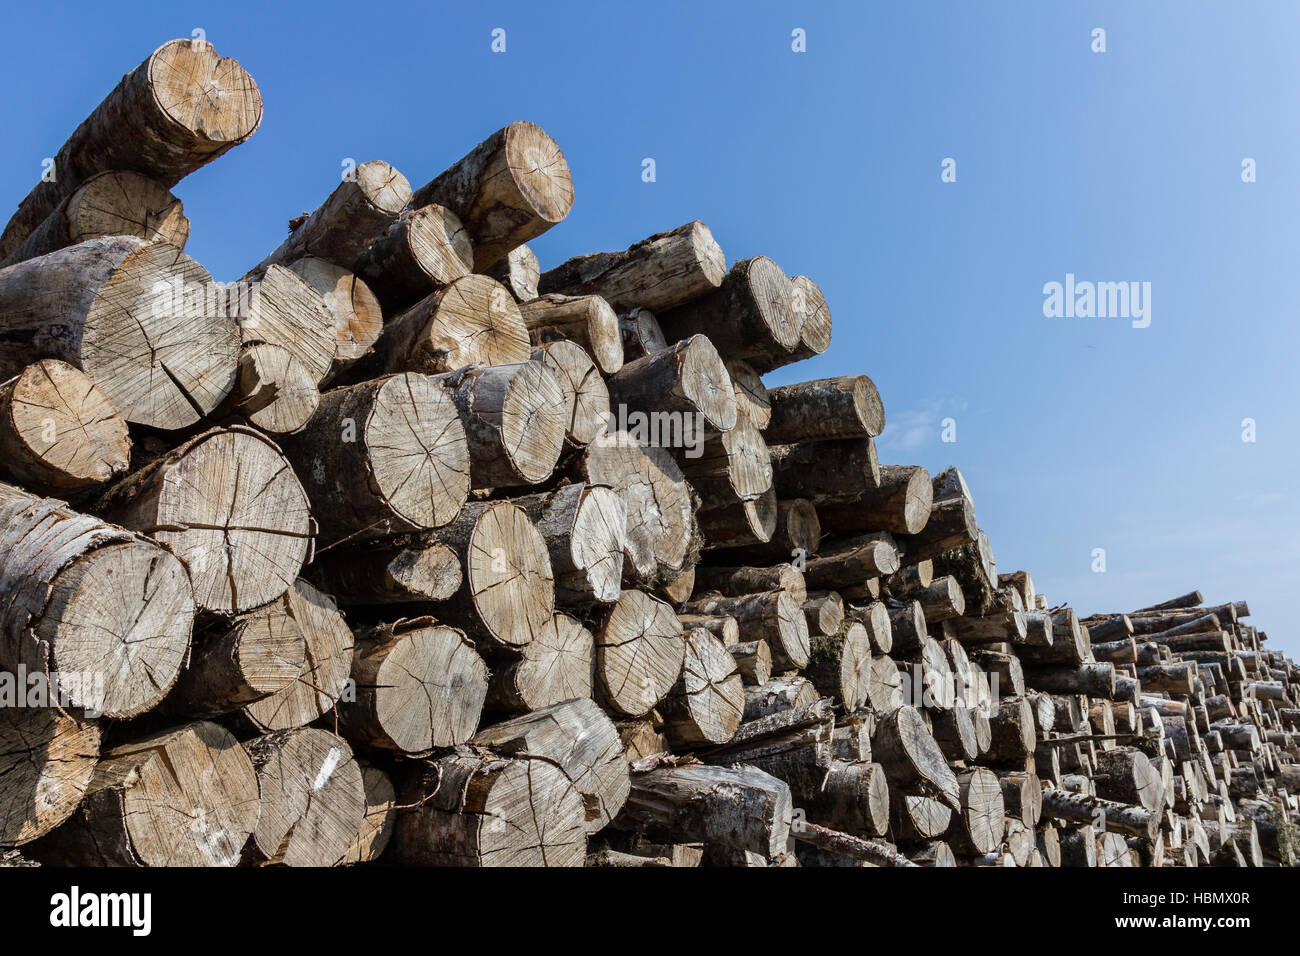 Big pile of wood logs Stock Photo